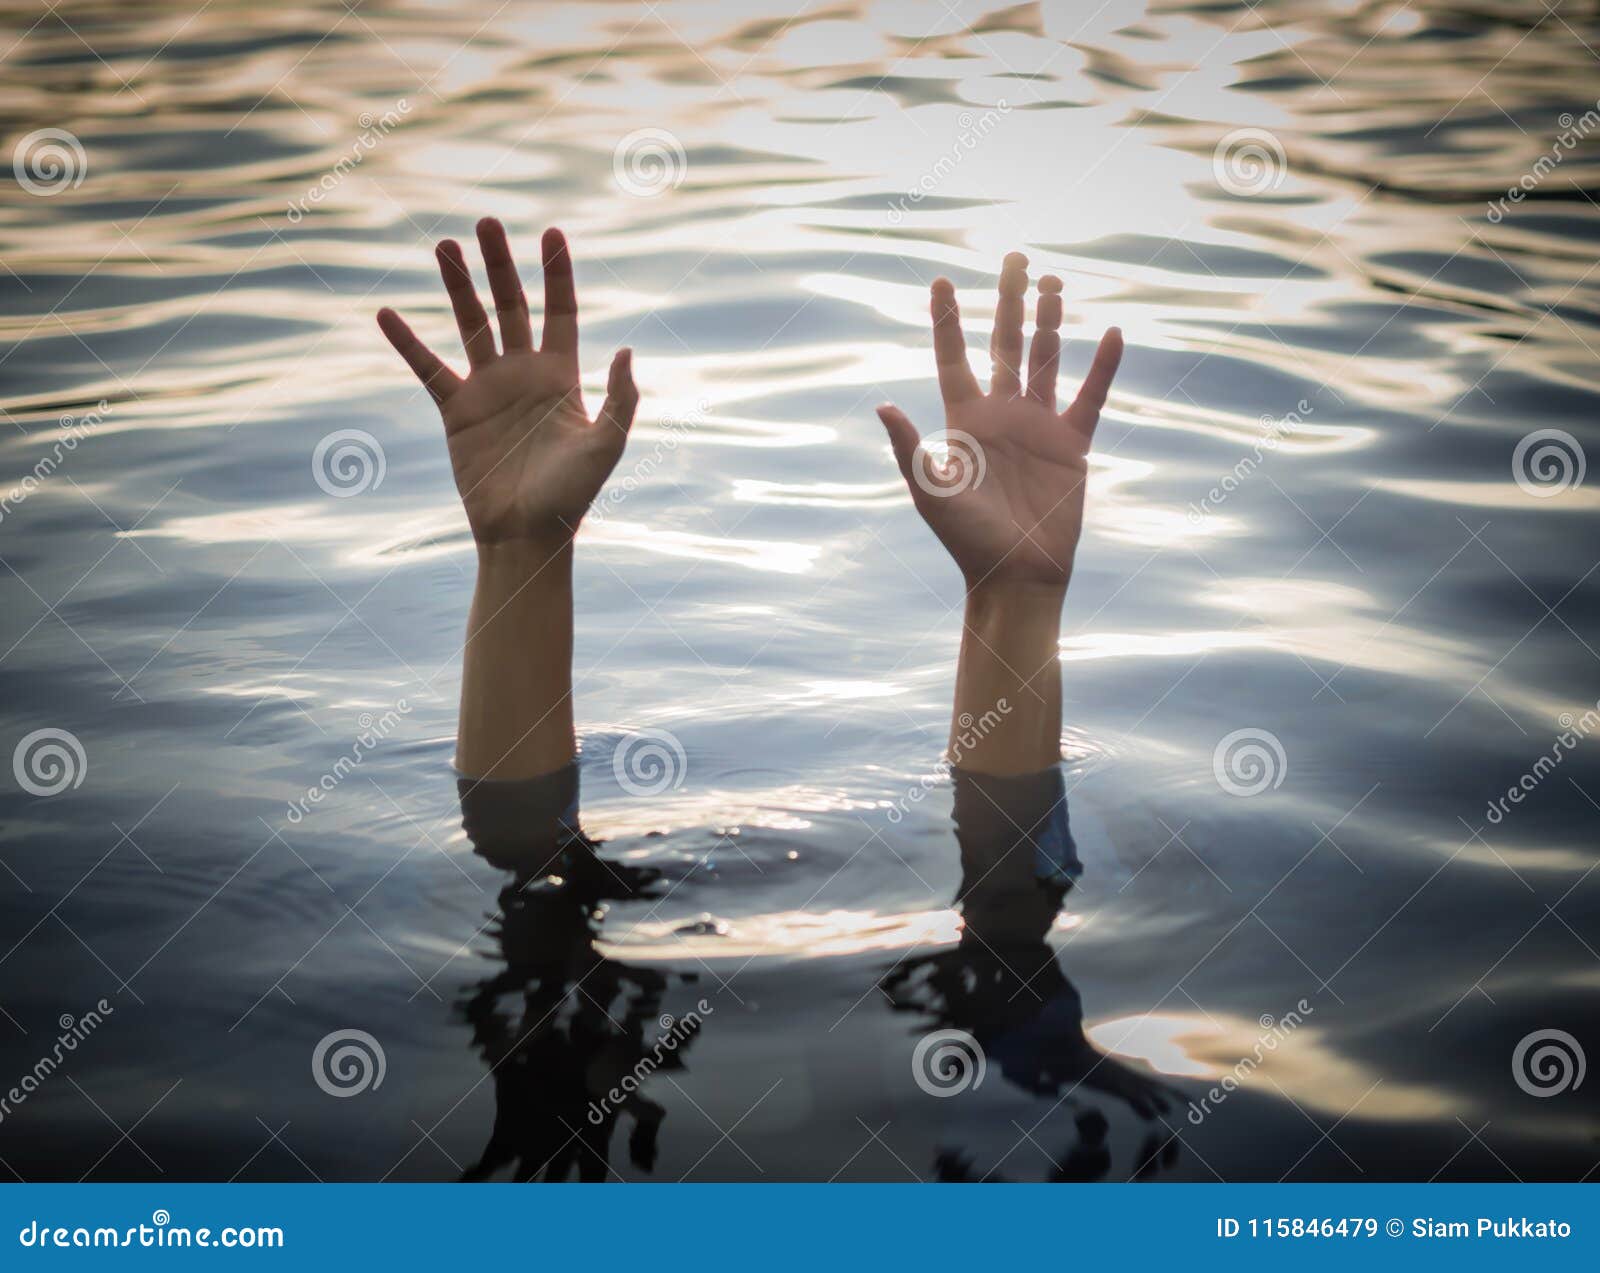 drowning victims, hand of drowning woman needing help